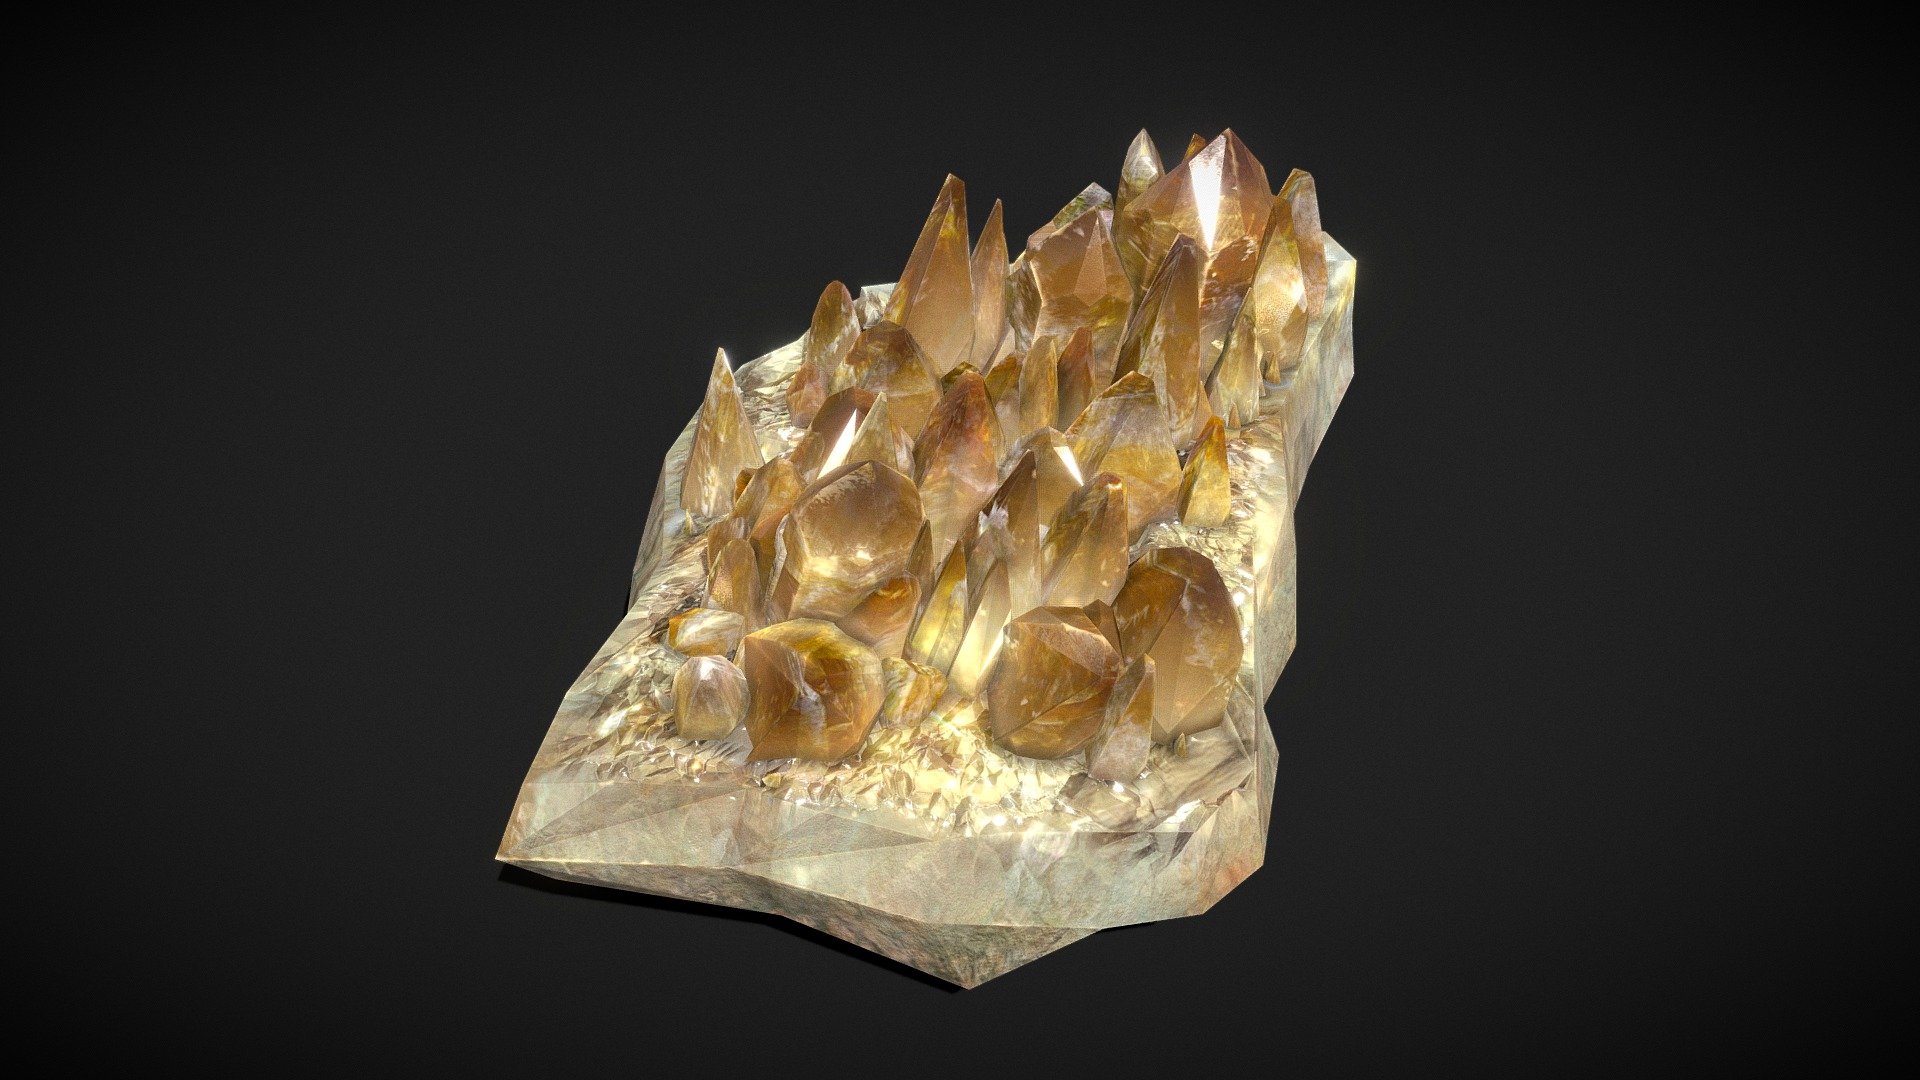 Cristal / Citrine / Mineral Quartz - low poly

Triangles: 3.4k Vertices: 2.1k

4096x4096 PNG texture

Minerals Collection &lt;&lt; - Citrine Quartz Cristal - low poly - Buy Royalty Free 3D model by Karolina Renkiewicz (@KarolinaRenkiewicz) 3d model